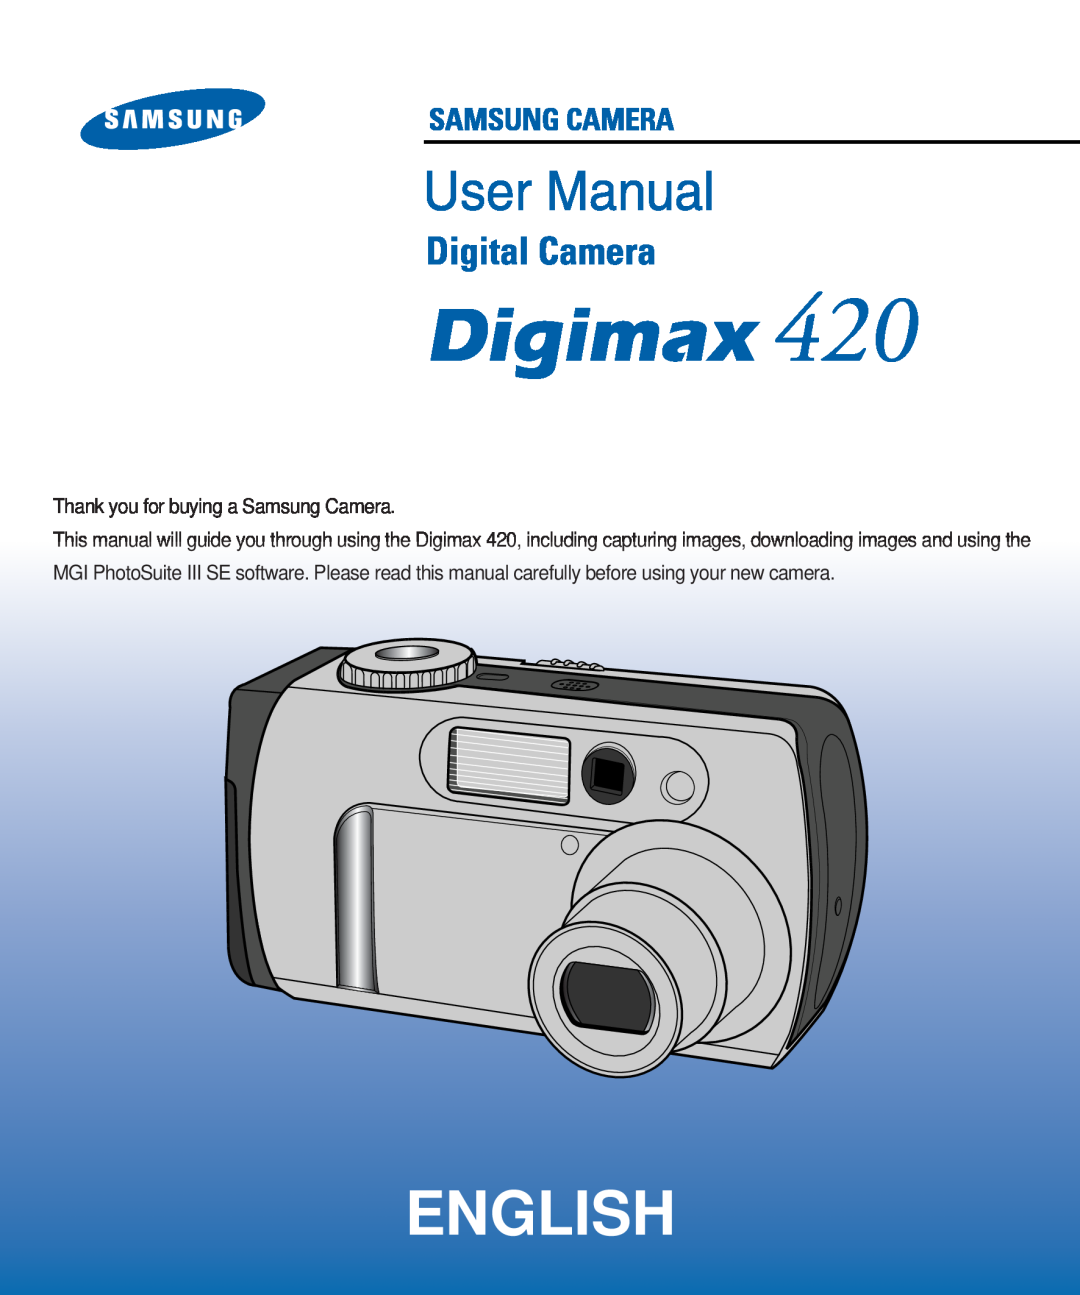 Samsung 420 manual English, Thank you for buying a Samsung Camera 